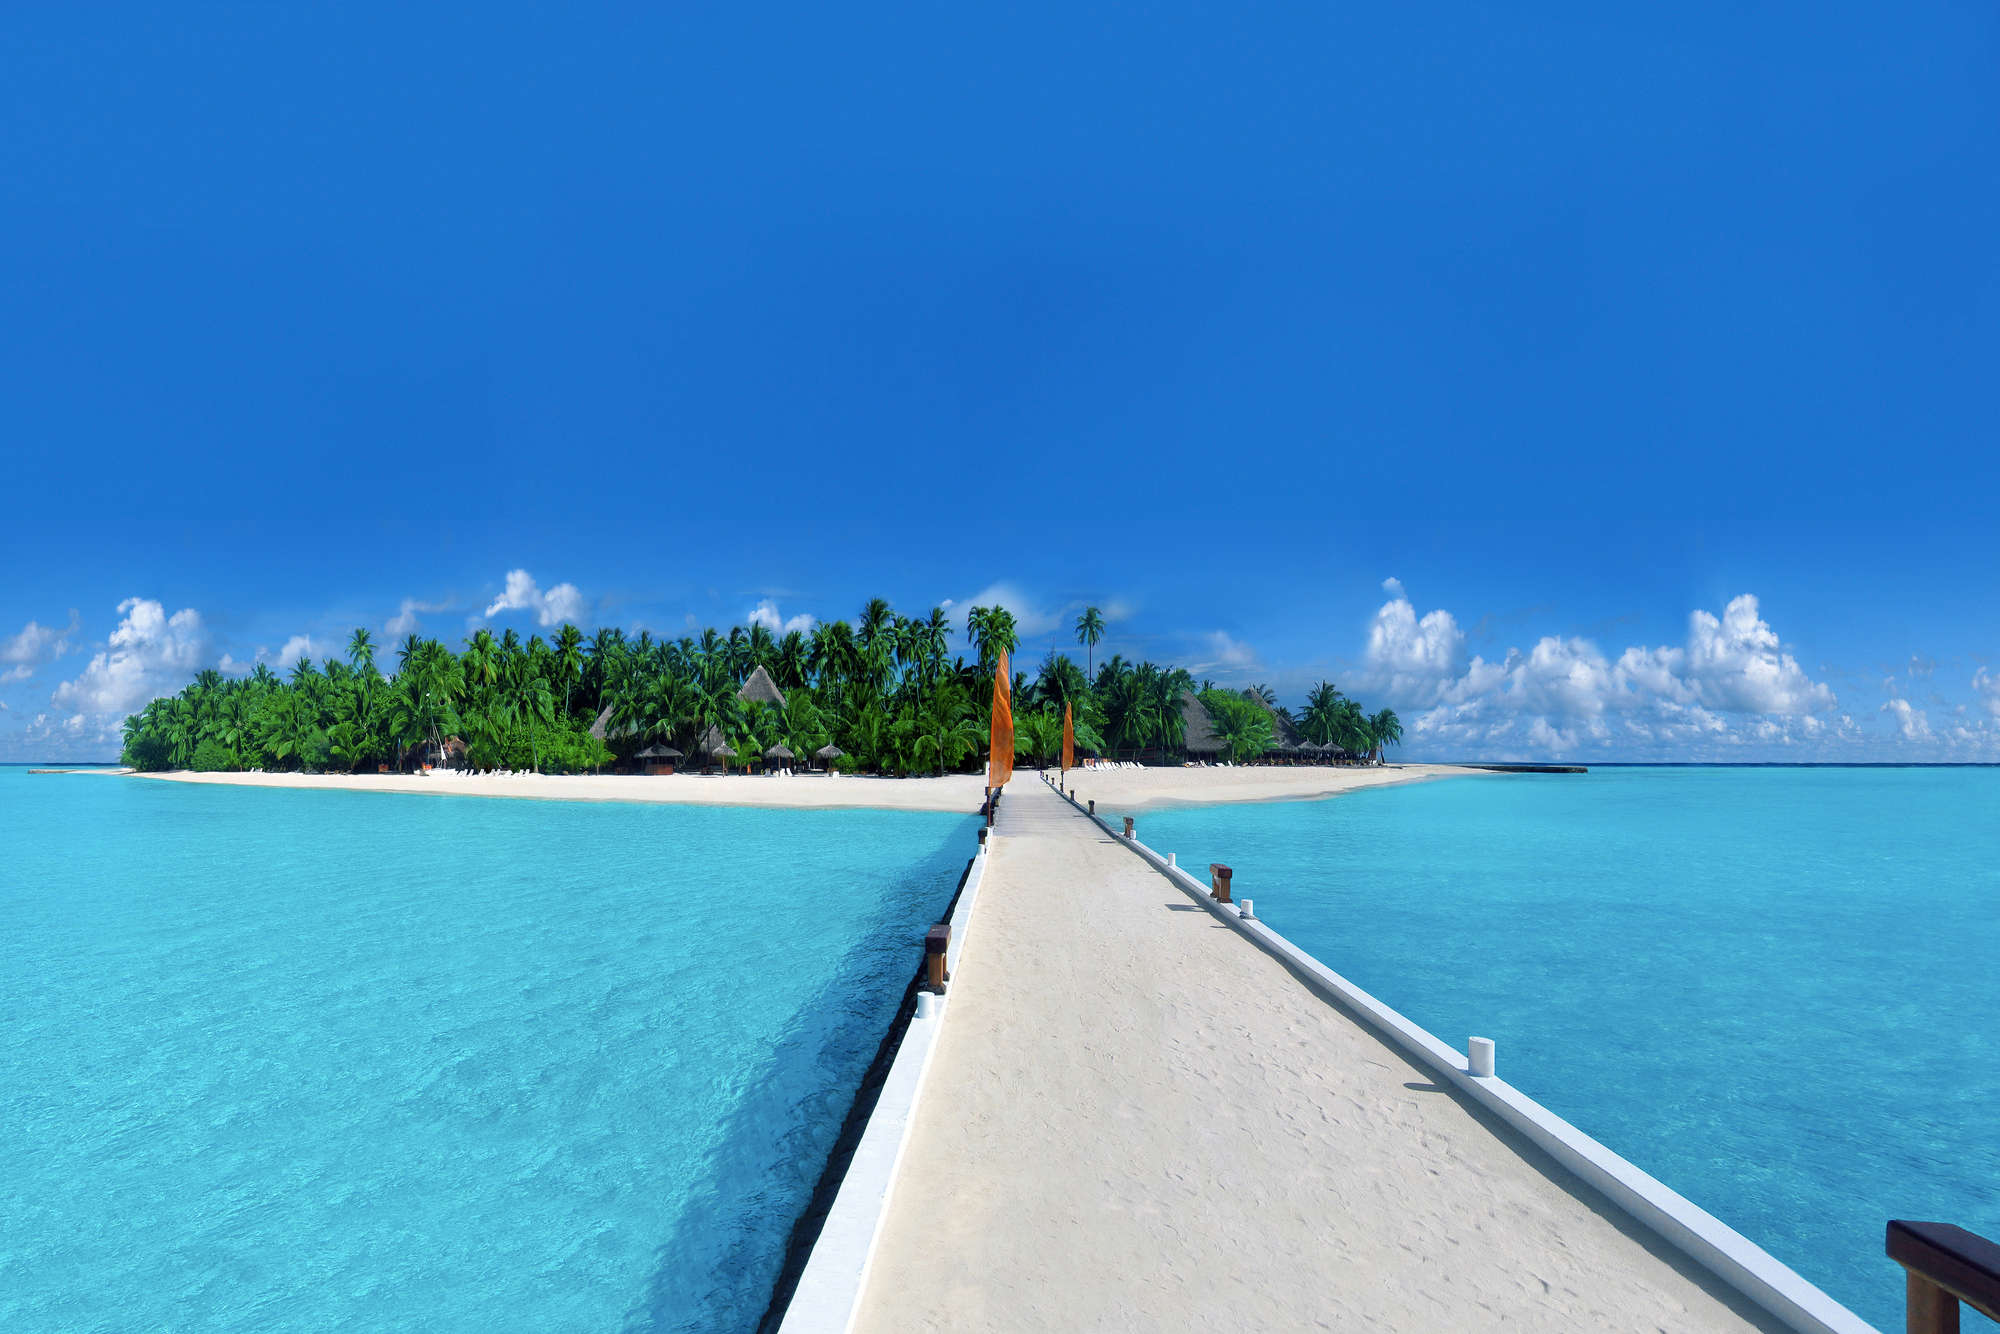             Island mural bridge to island with palm trees on matt smooth fleece
        